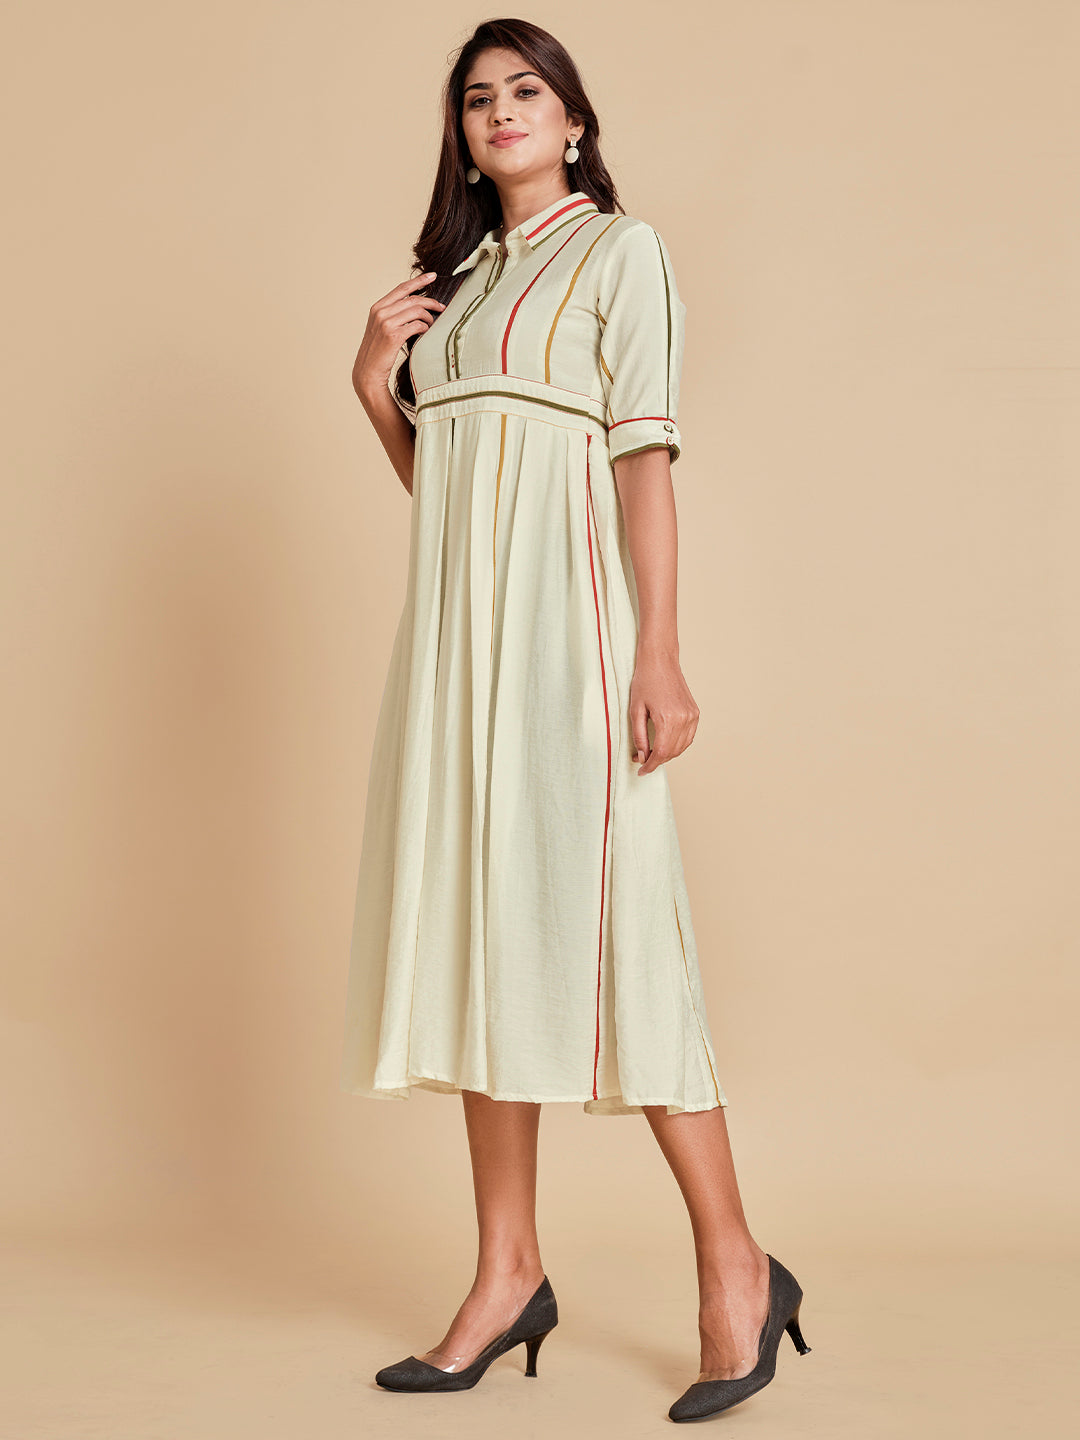 Stripe Print Flared Dress - ARH738A